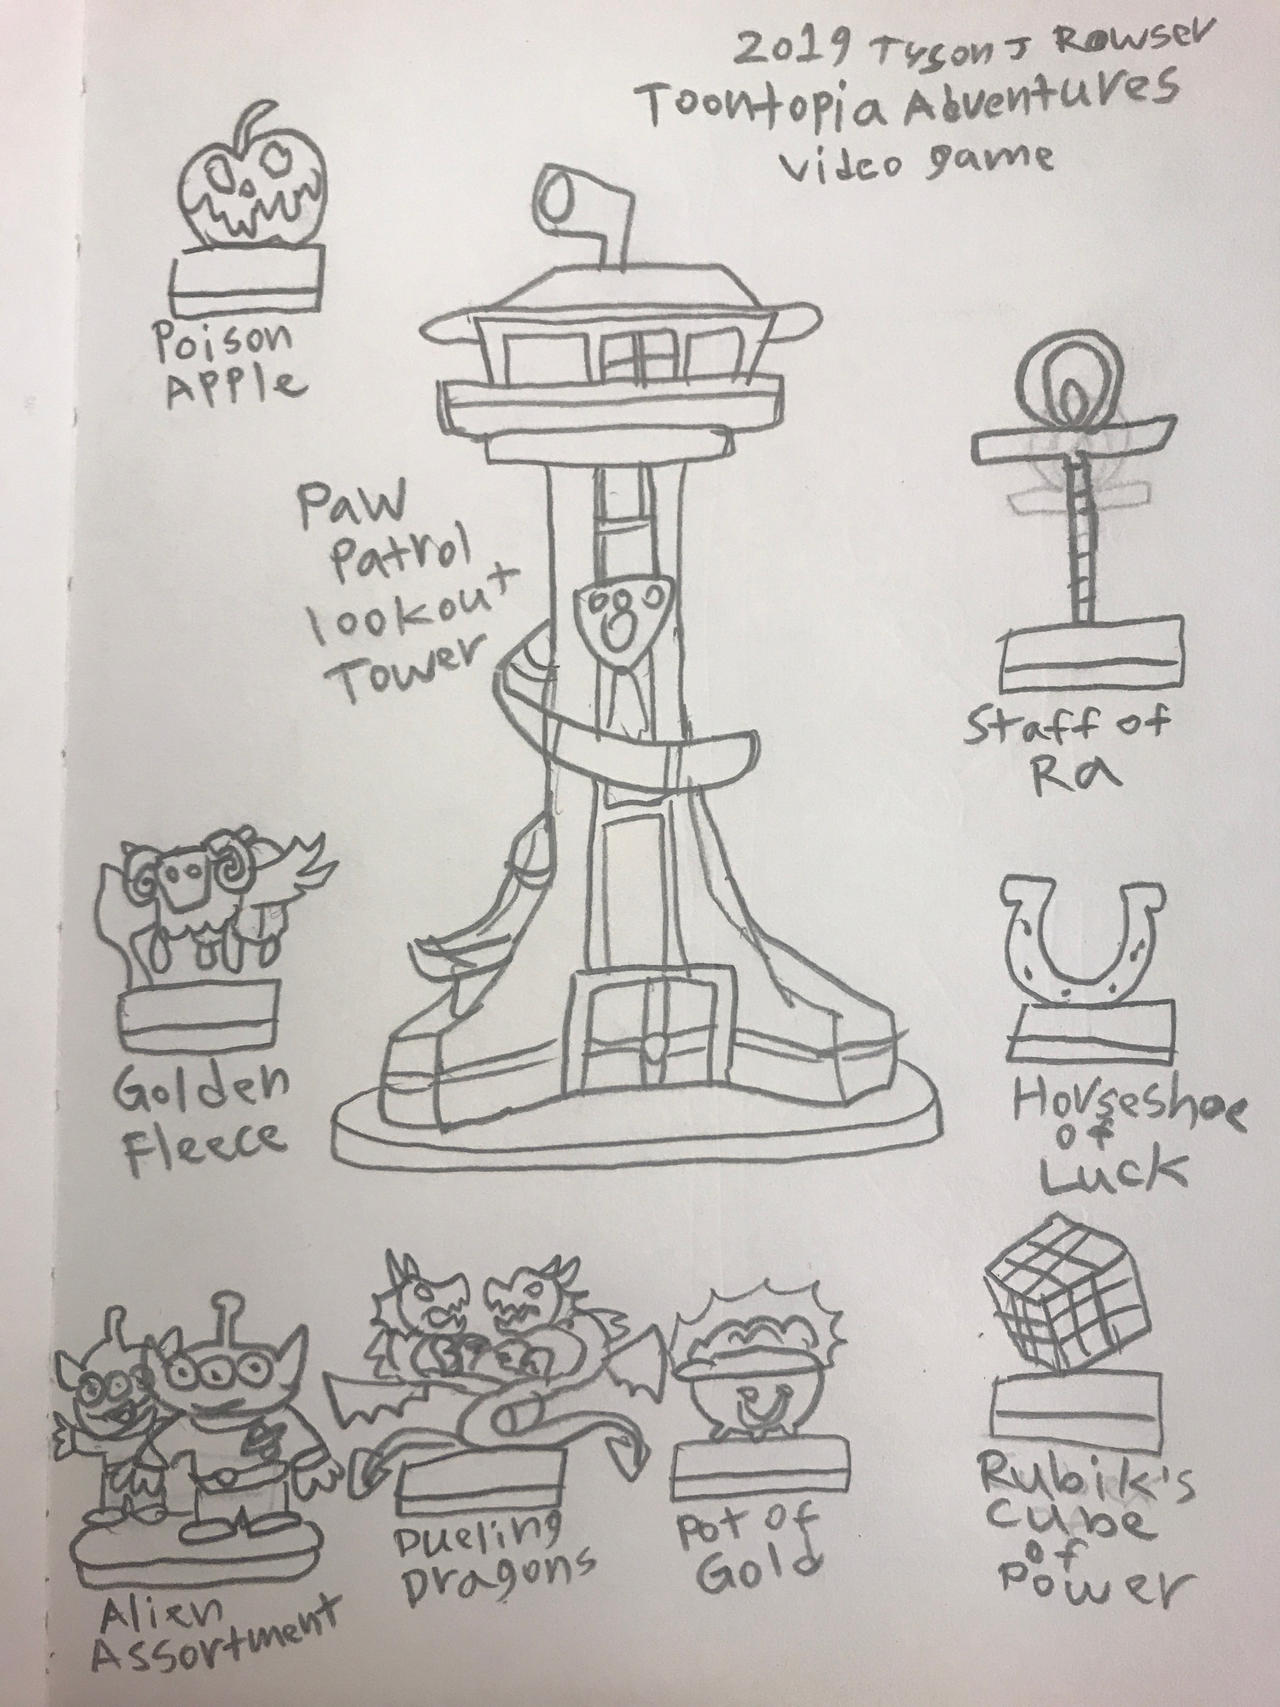 Paw patrol lookout tower and bonus items by rowserlotstudios on